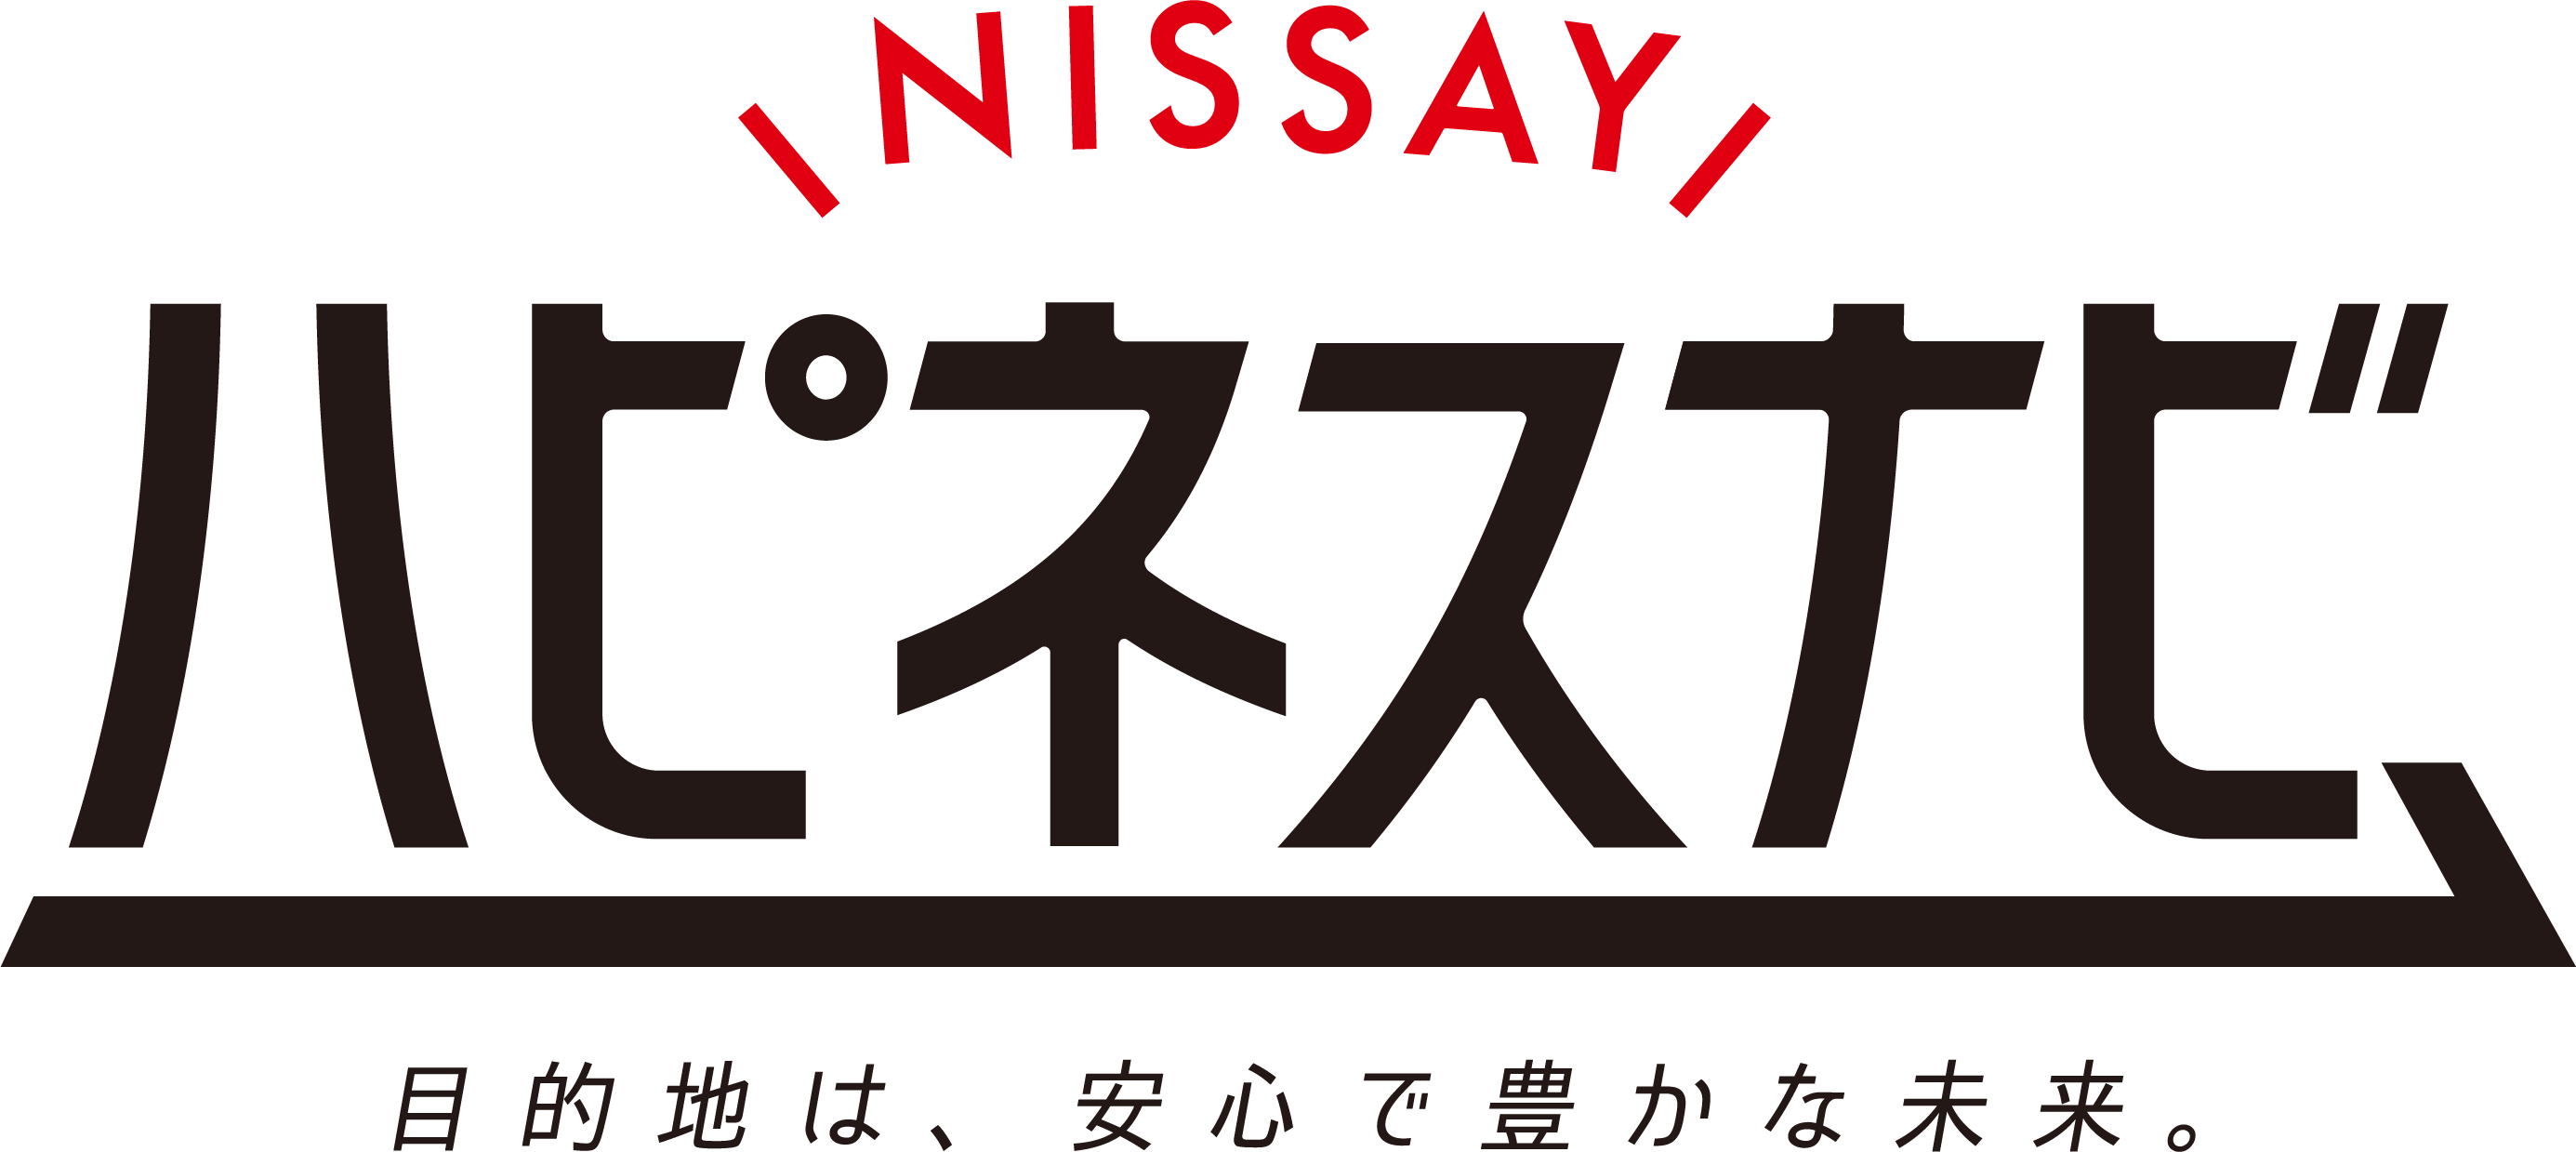 NISSAY ハピネスナビ 目的地は、安心で豊かな未来